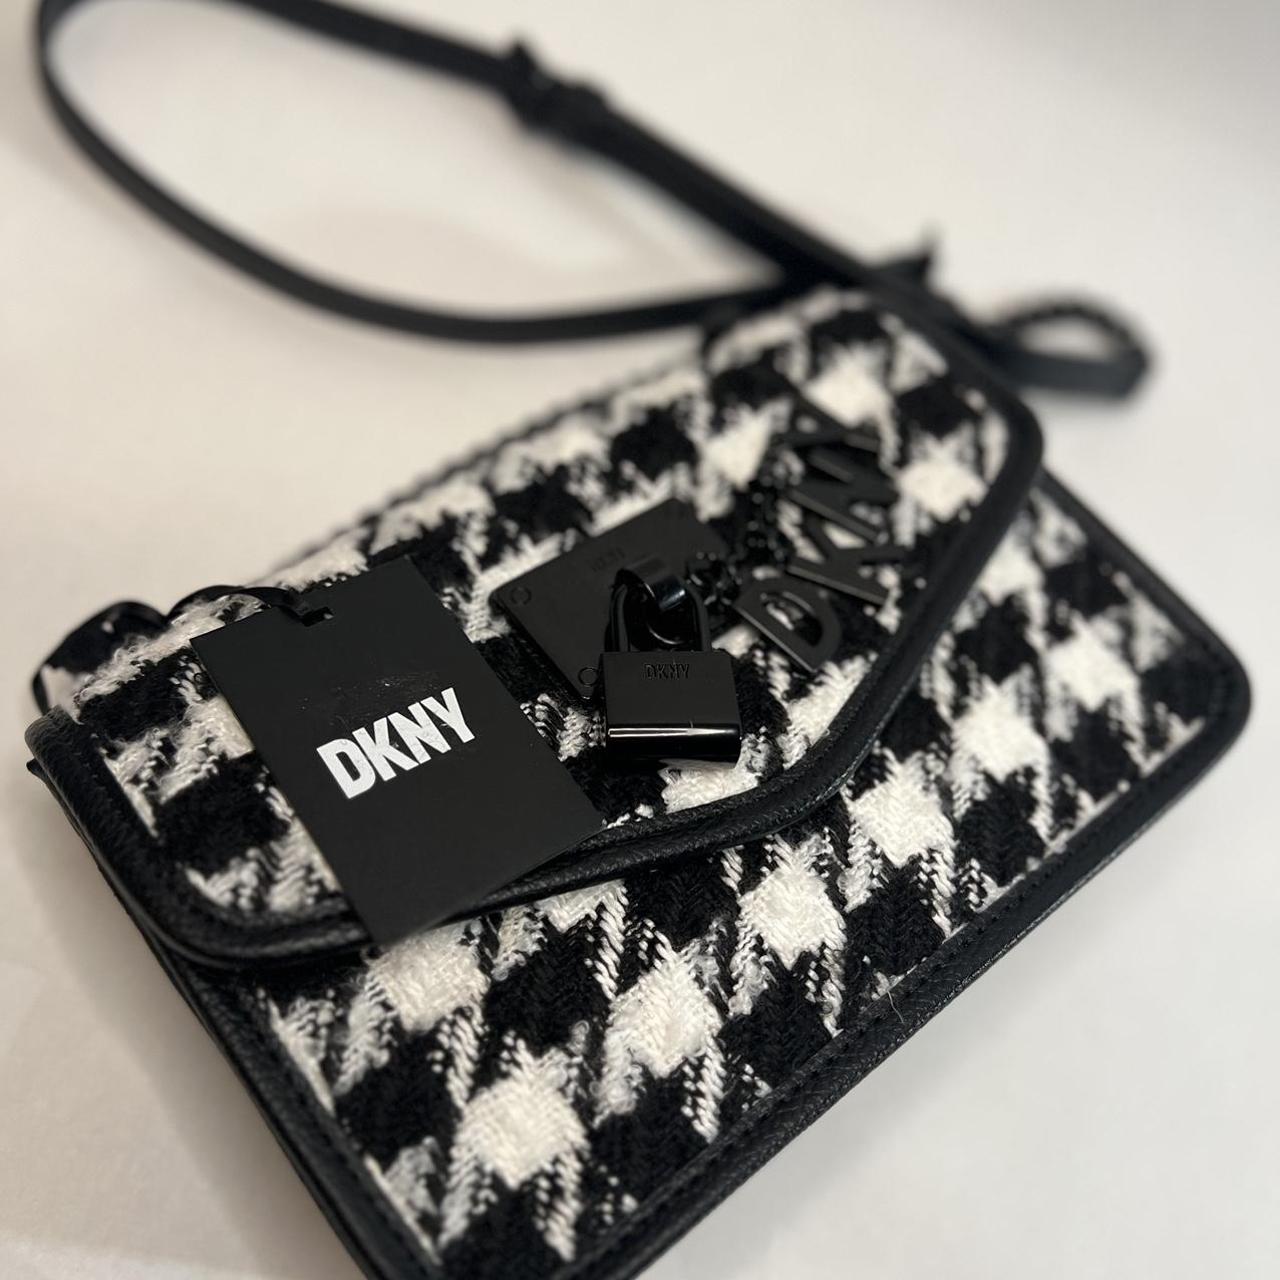 DKNY Women's Black and White Bag (3)